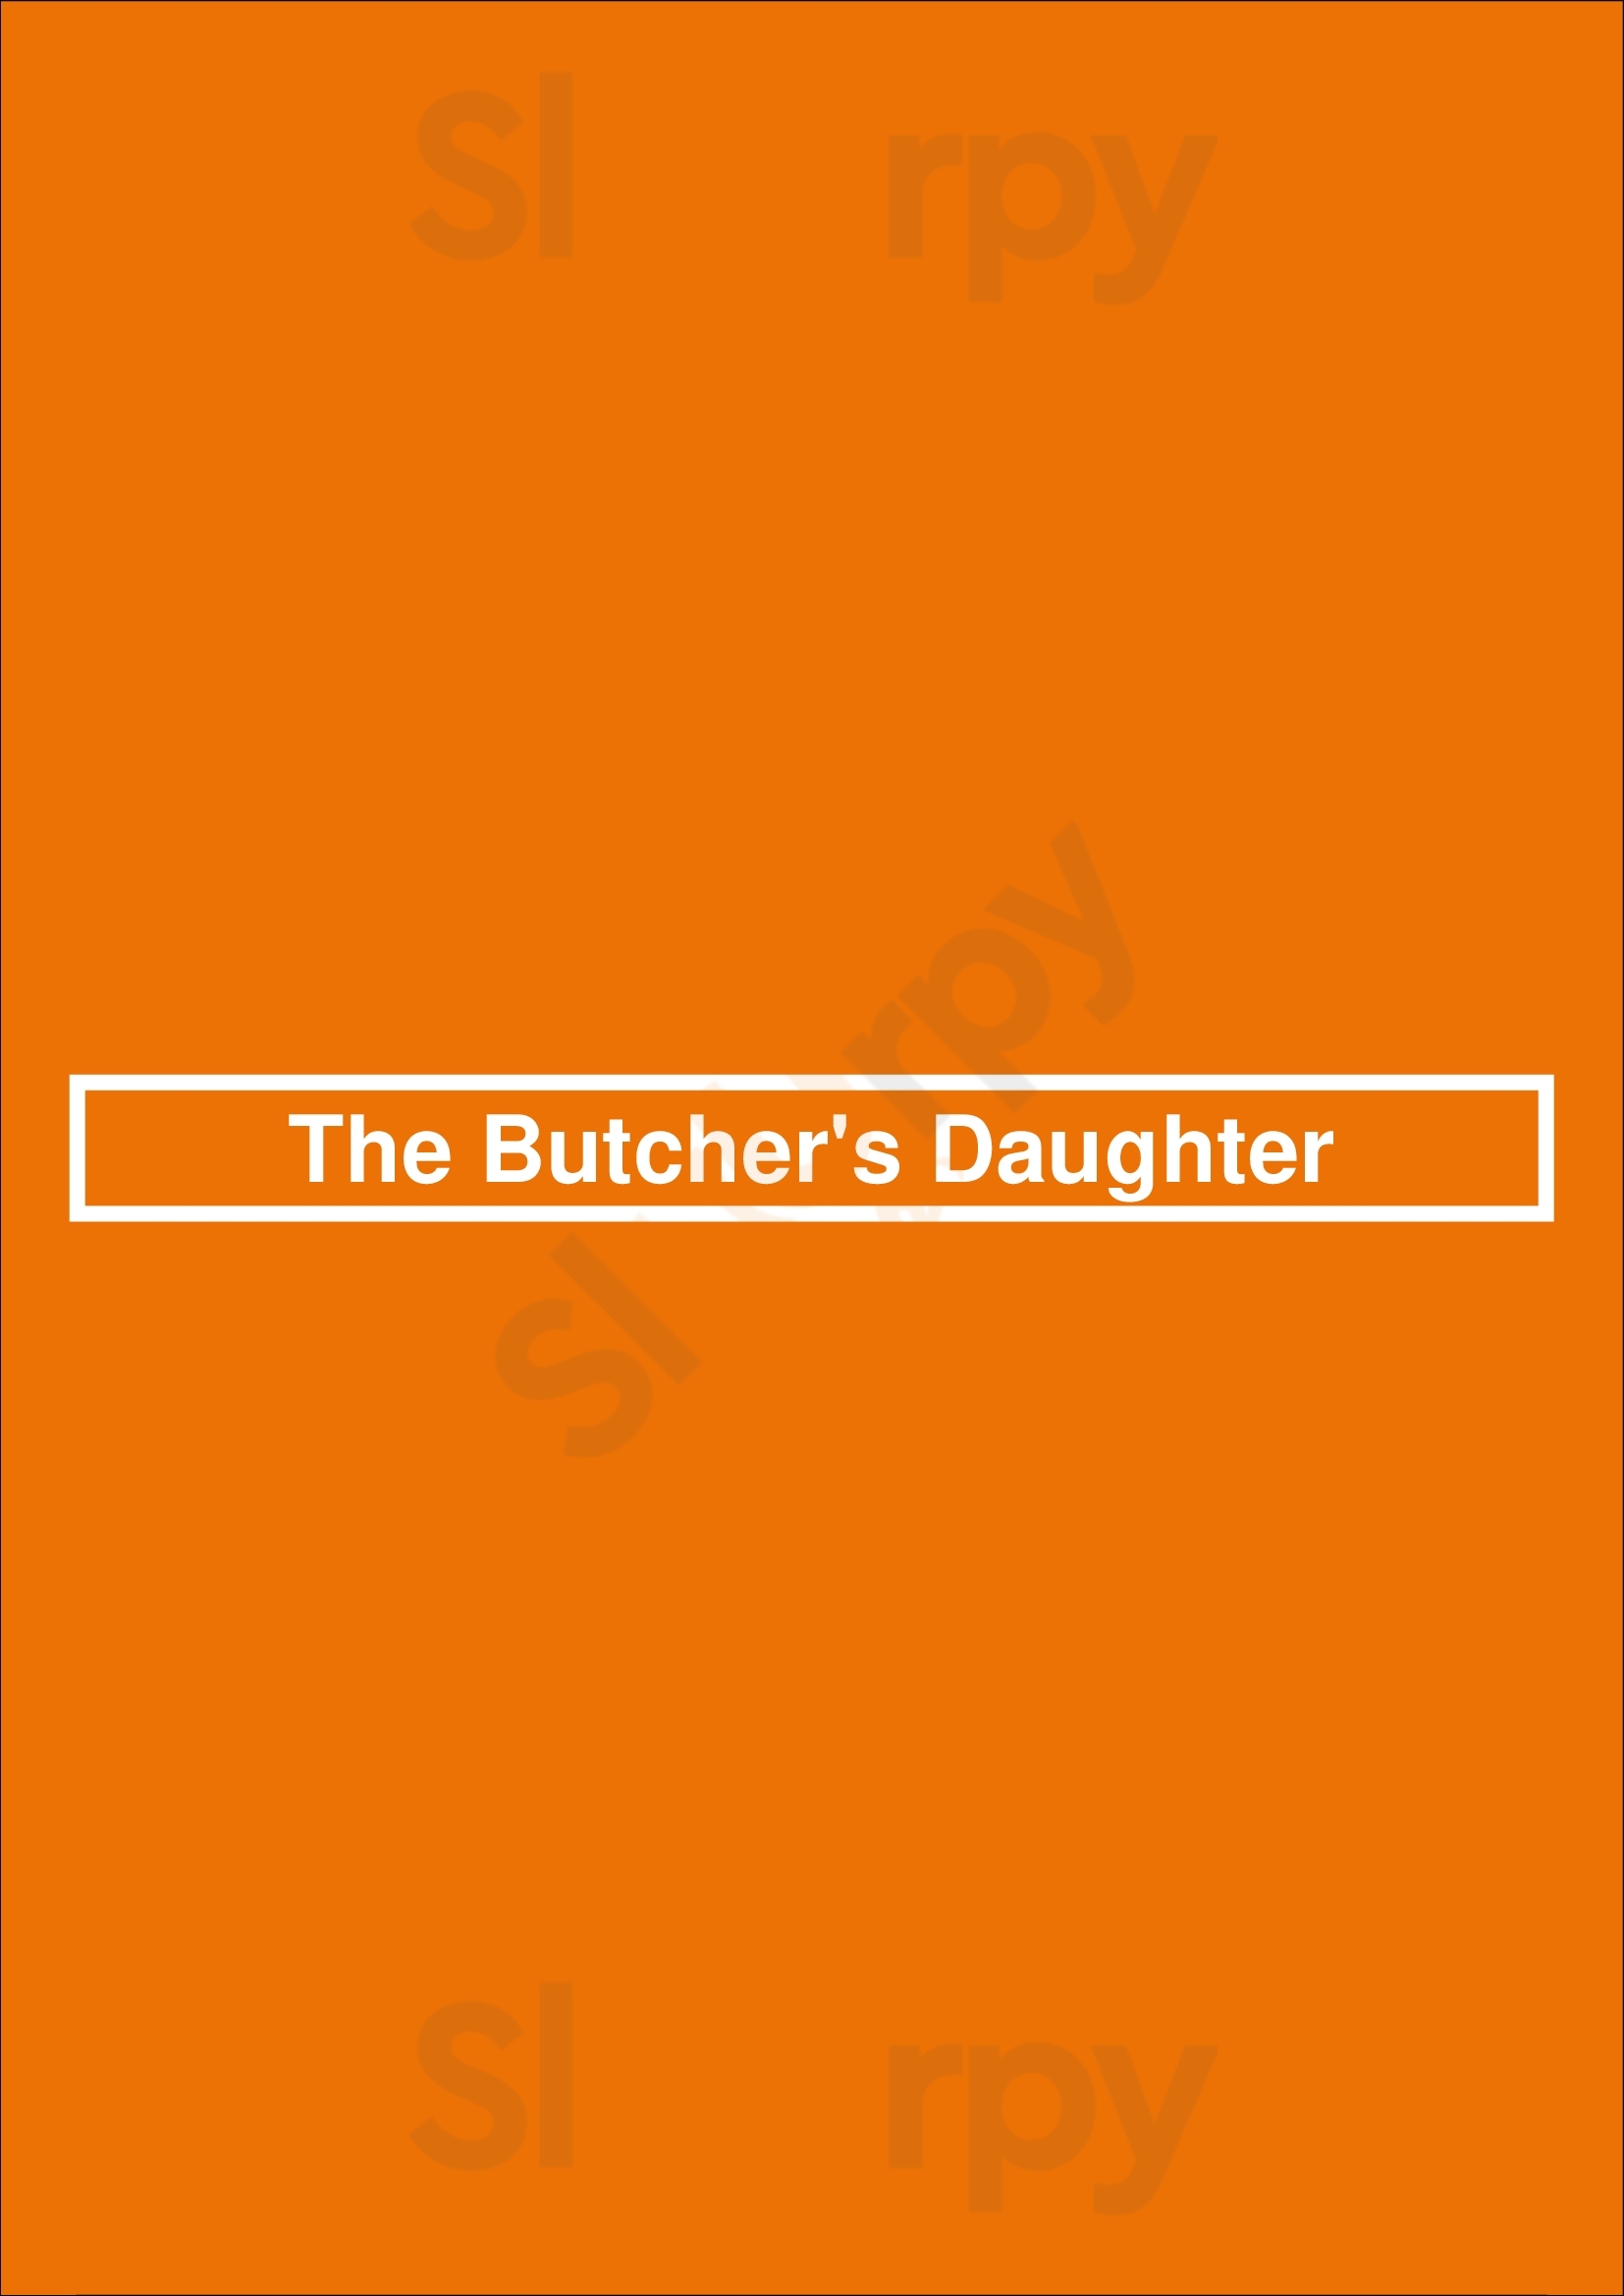 The Butcher's Daughter Los Angeles Menu - 1